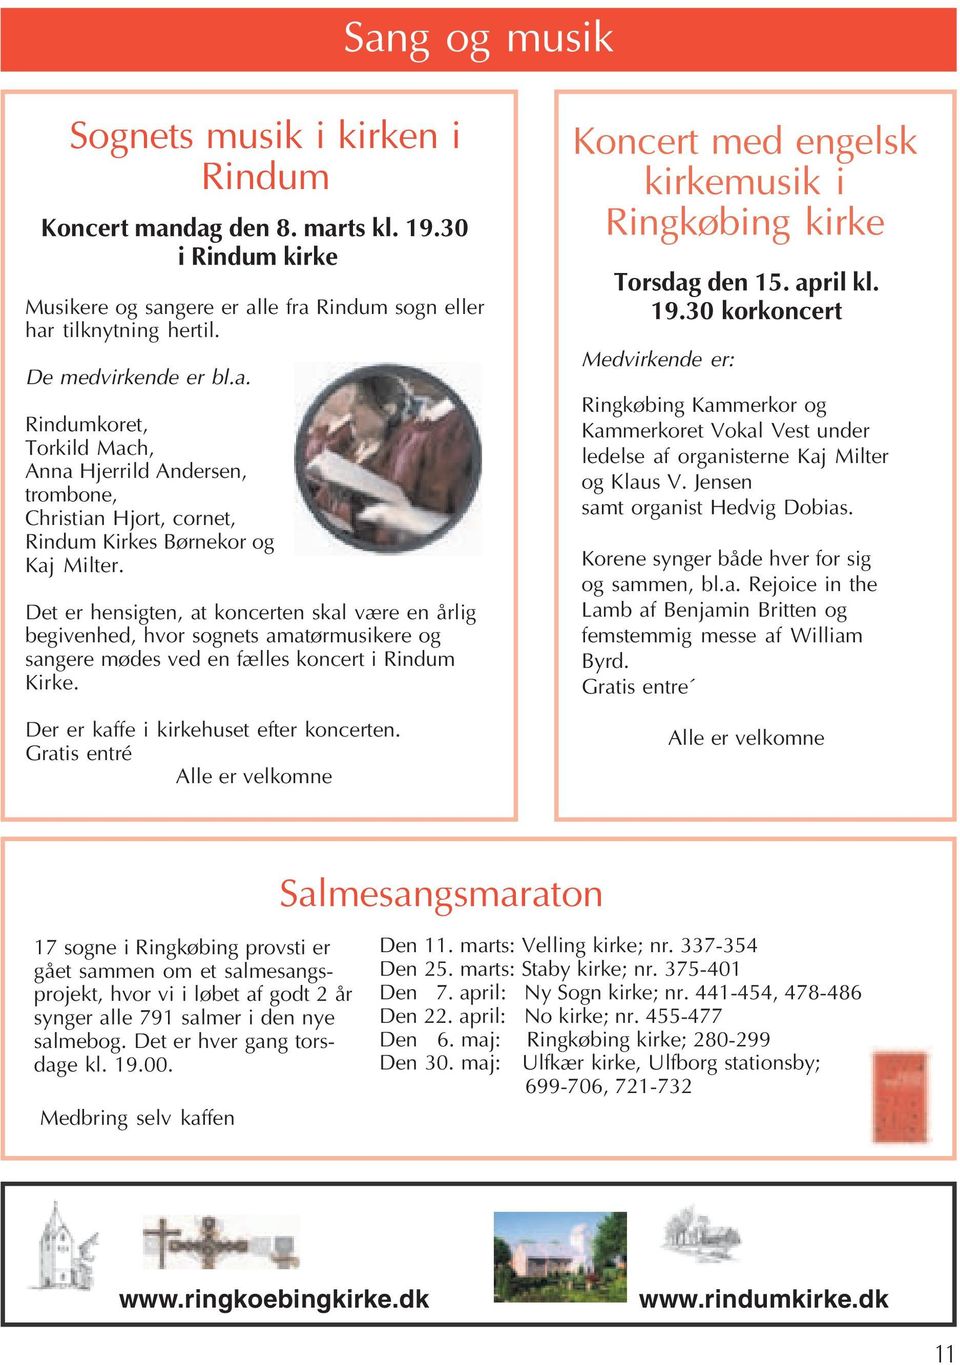 Gratis entré Alle er velkomne Koncert med engelsk kirkemusik i Ringkøbing kirke Torsdag den 15. april kl. 19.